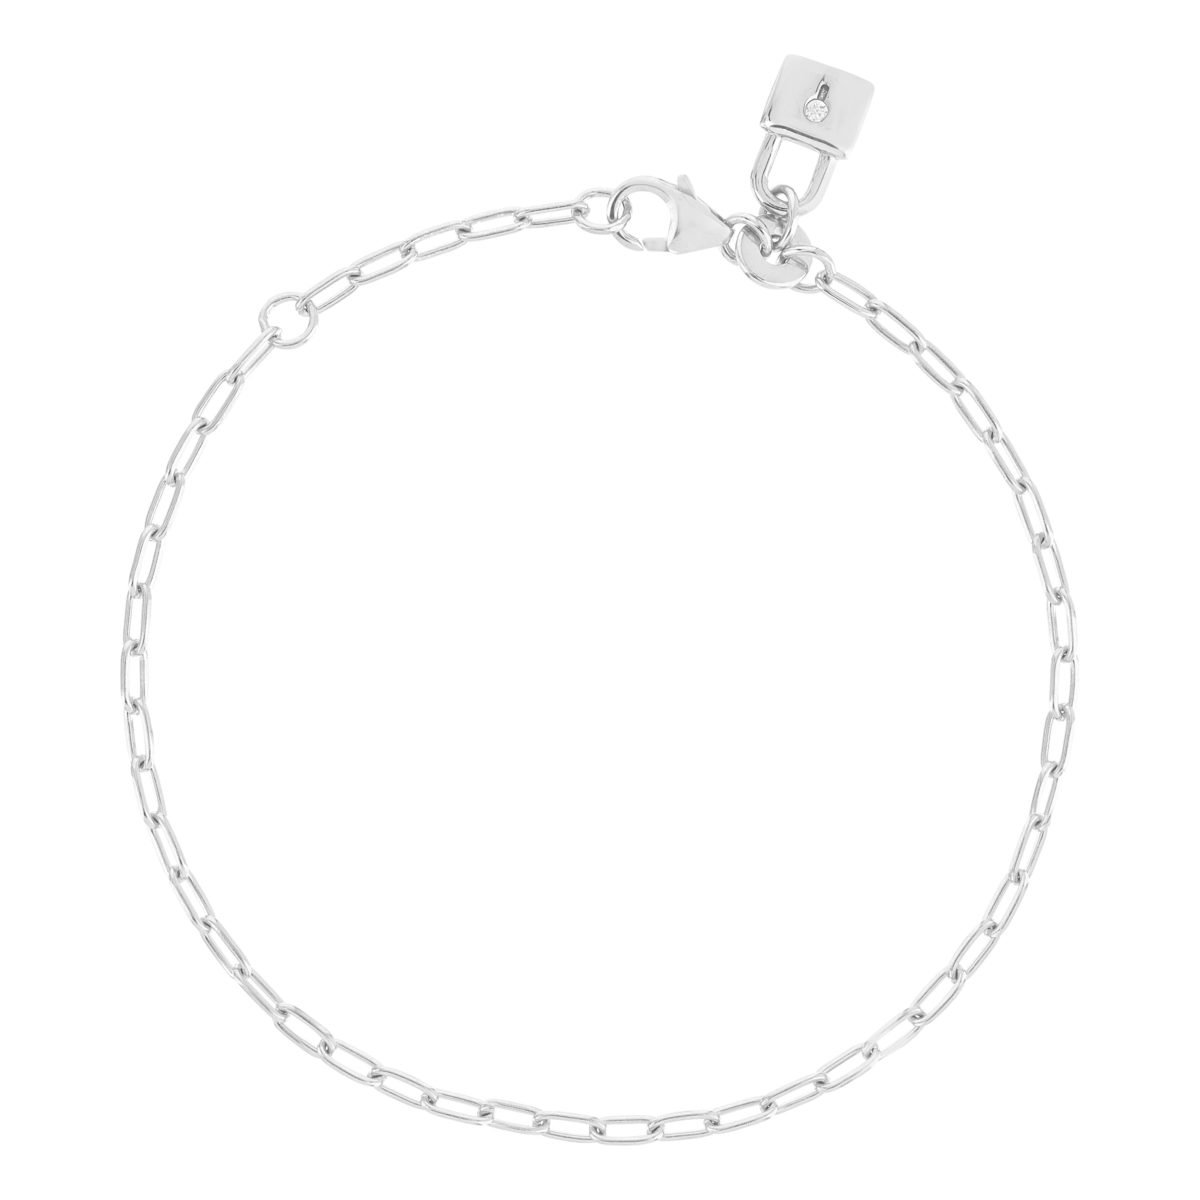 Bracelet argent 925, motif cadenas zirconia 18 cm